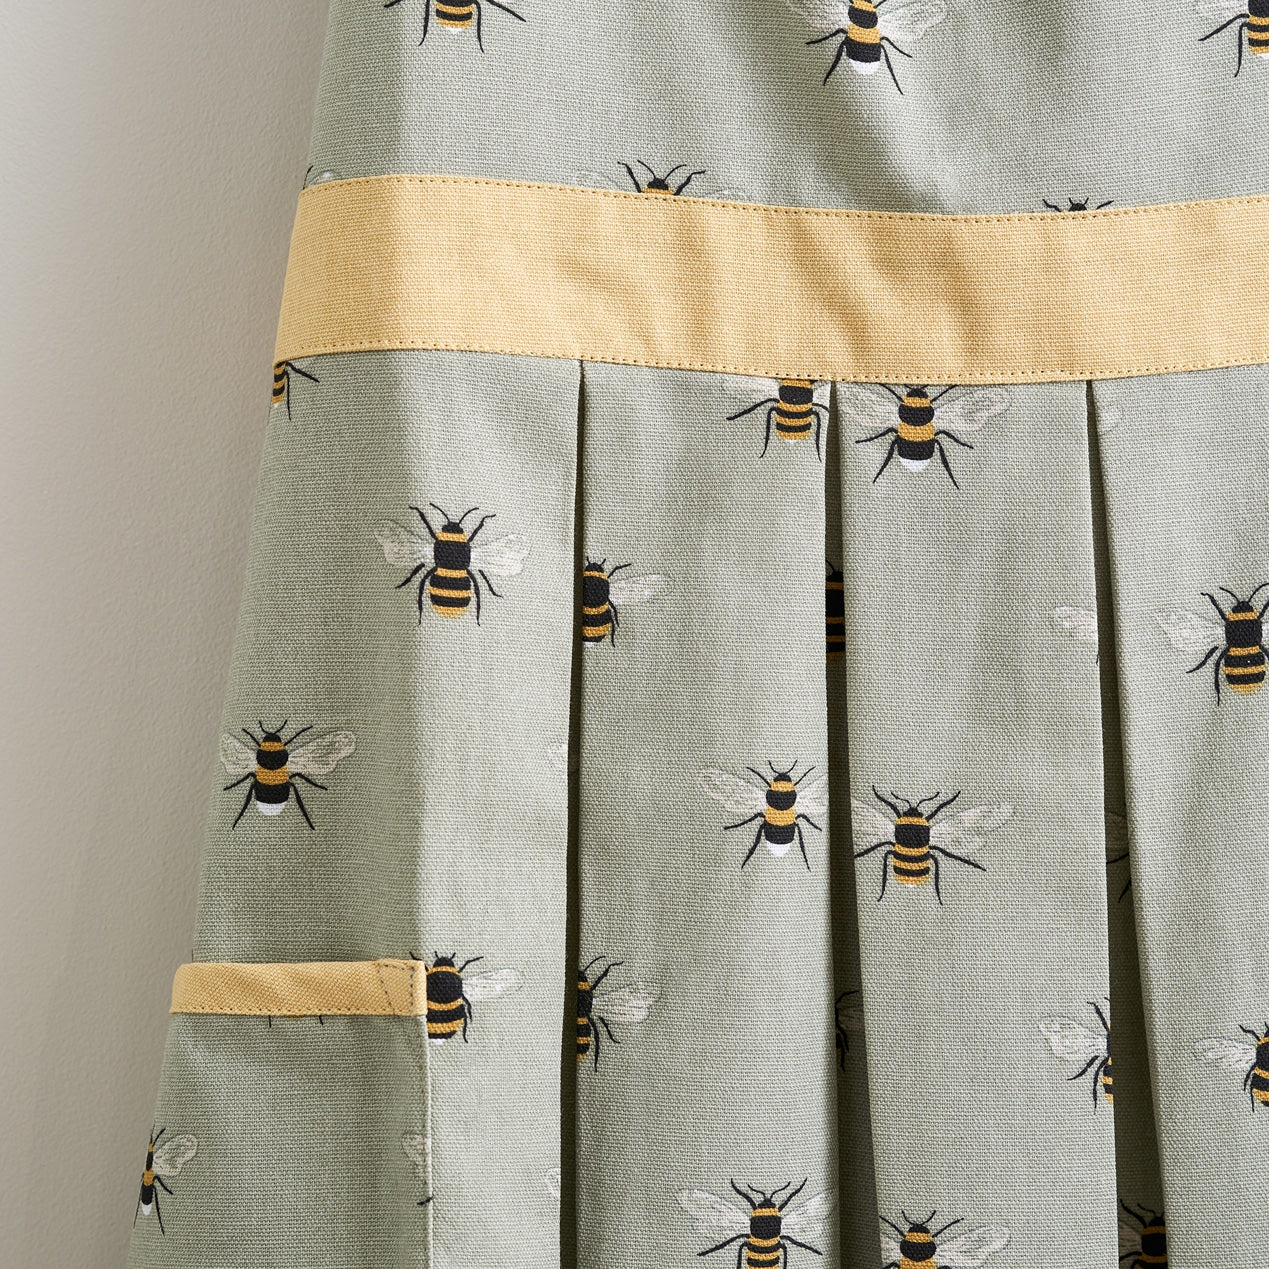 Bees Vintage Apron